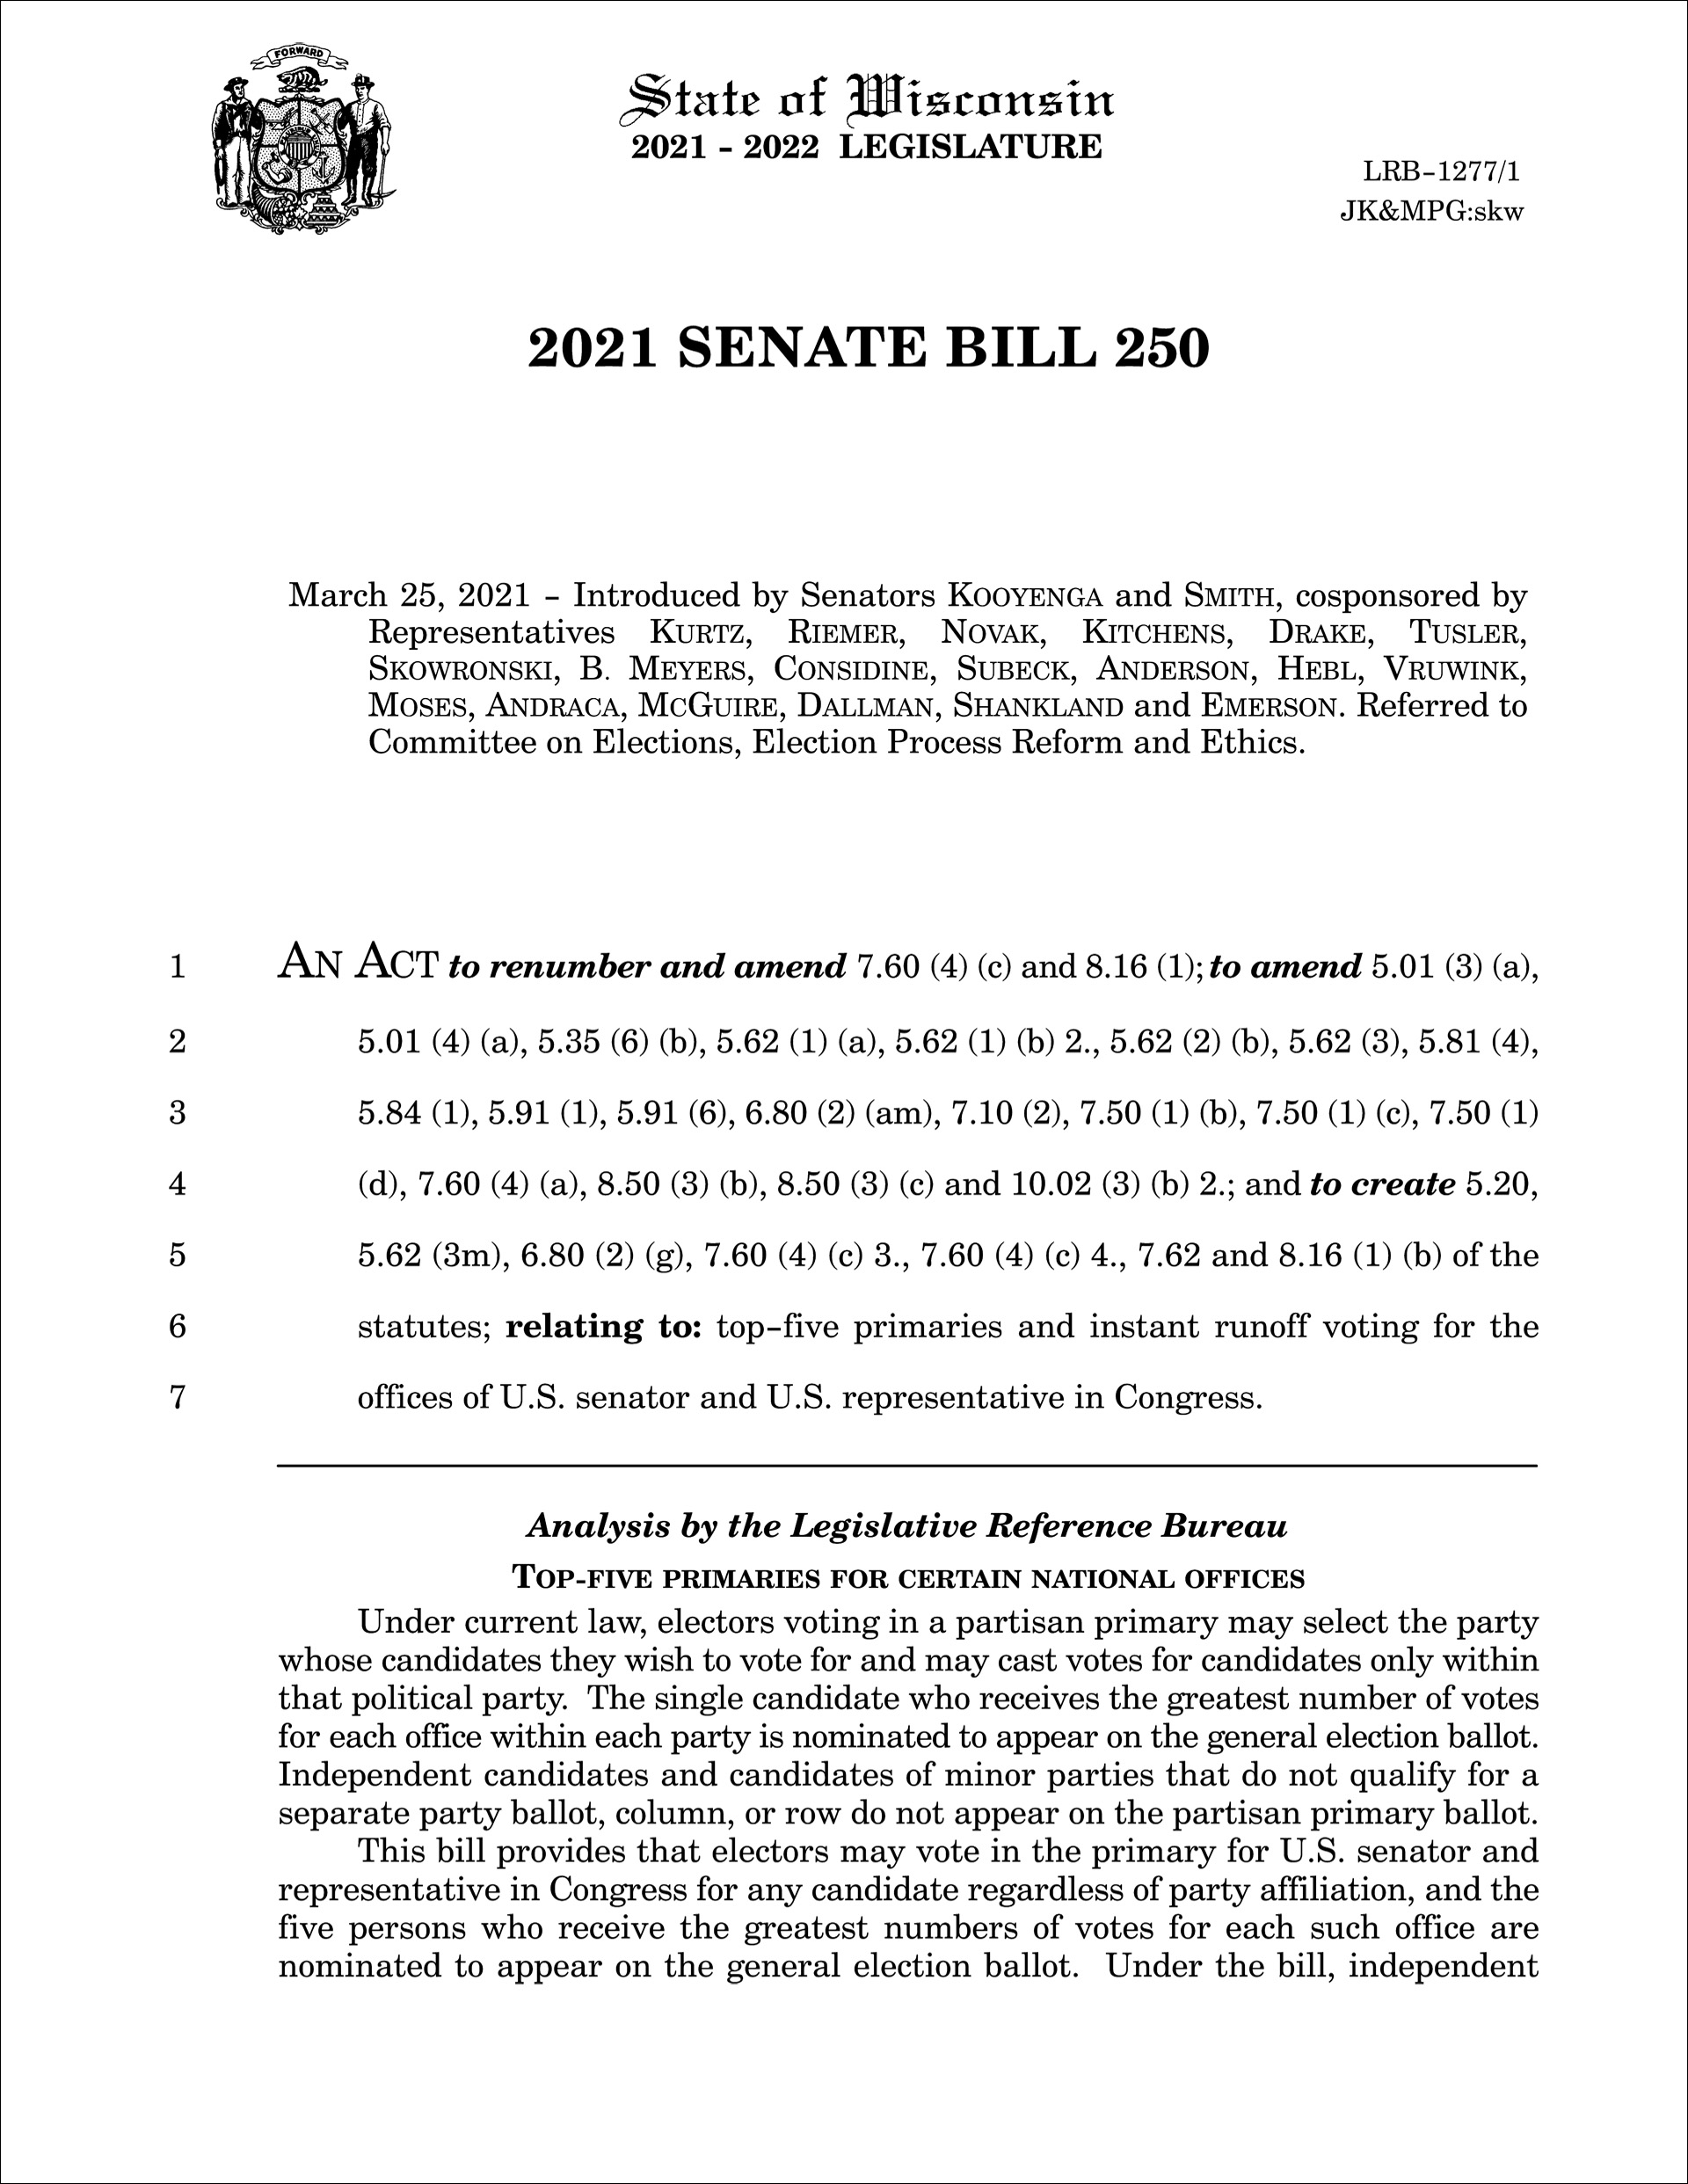 Senate Bill 250